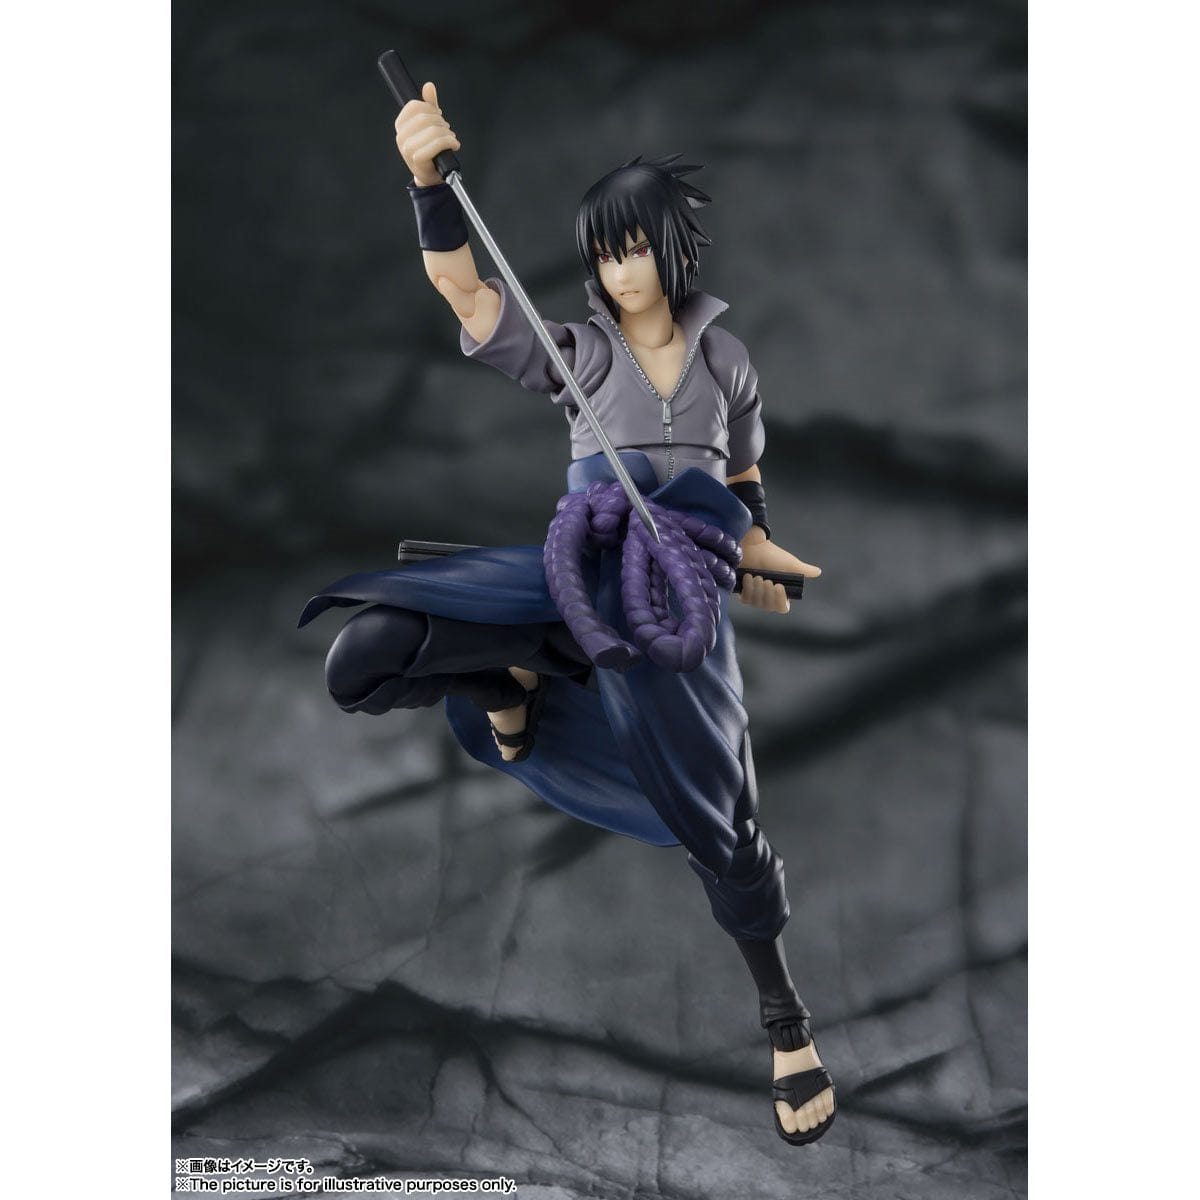 S.H.Figuarts Figures - Naruto: Shippuden - Sasuke Uchiha (He Who Bears All Hatred) Jump with sword 